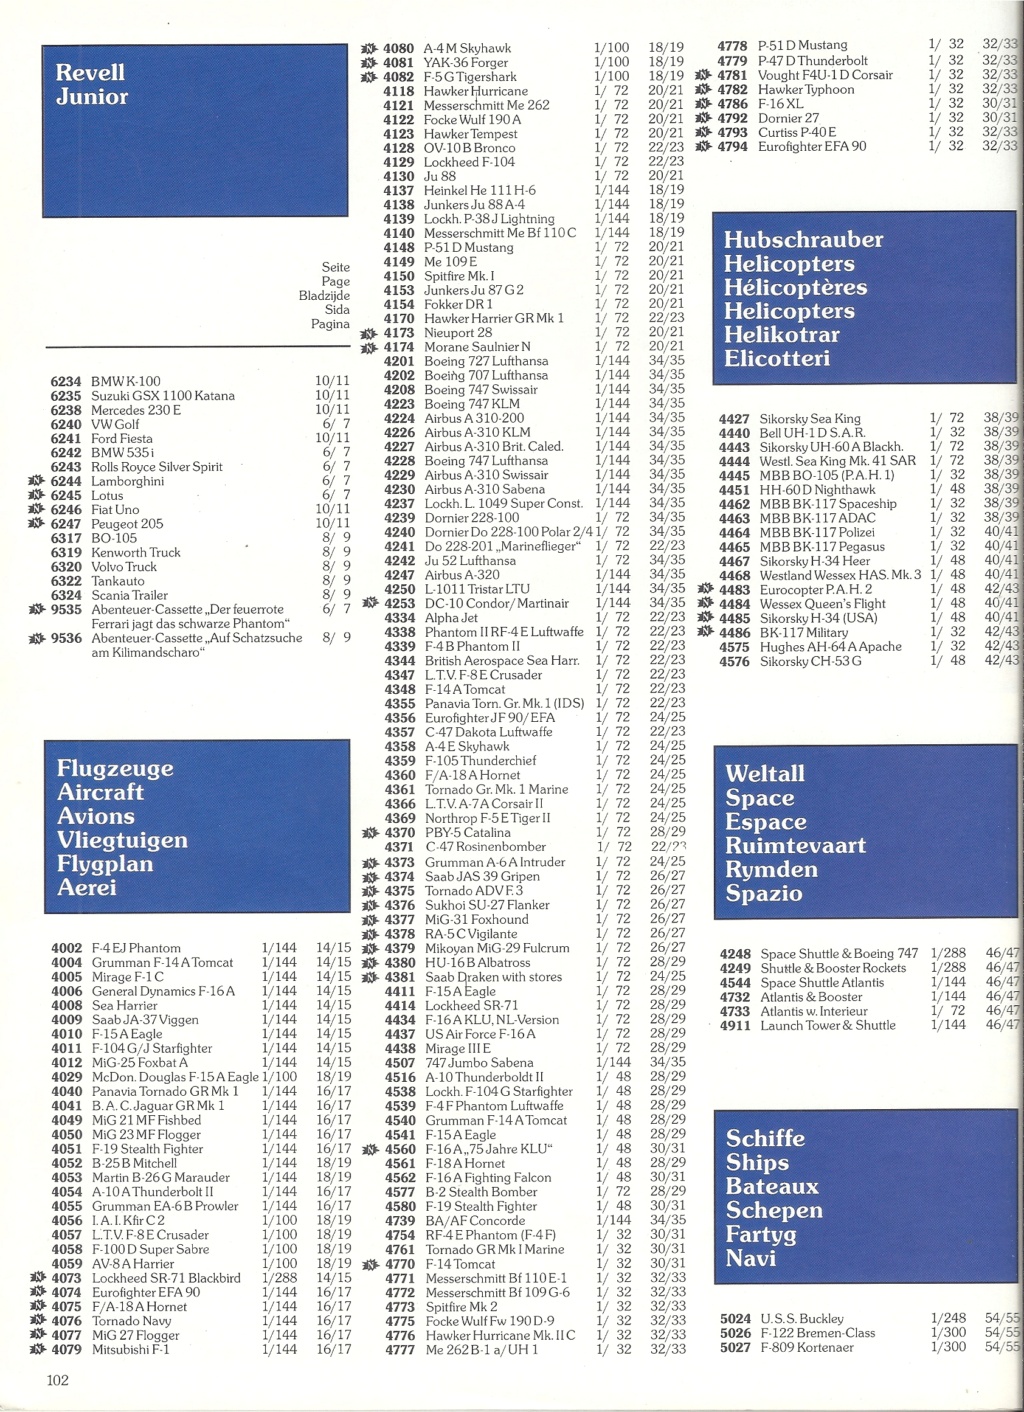 [REVELL 1989] Catalogue 1989 Reve1619